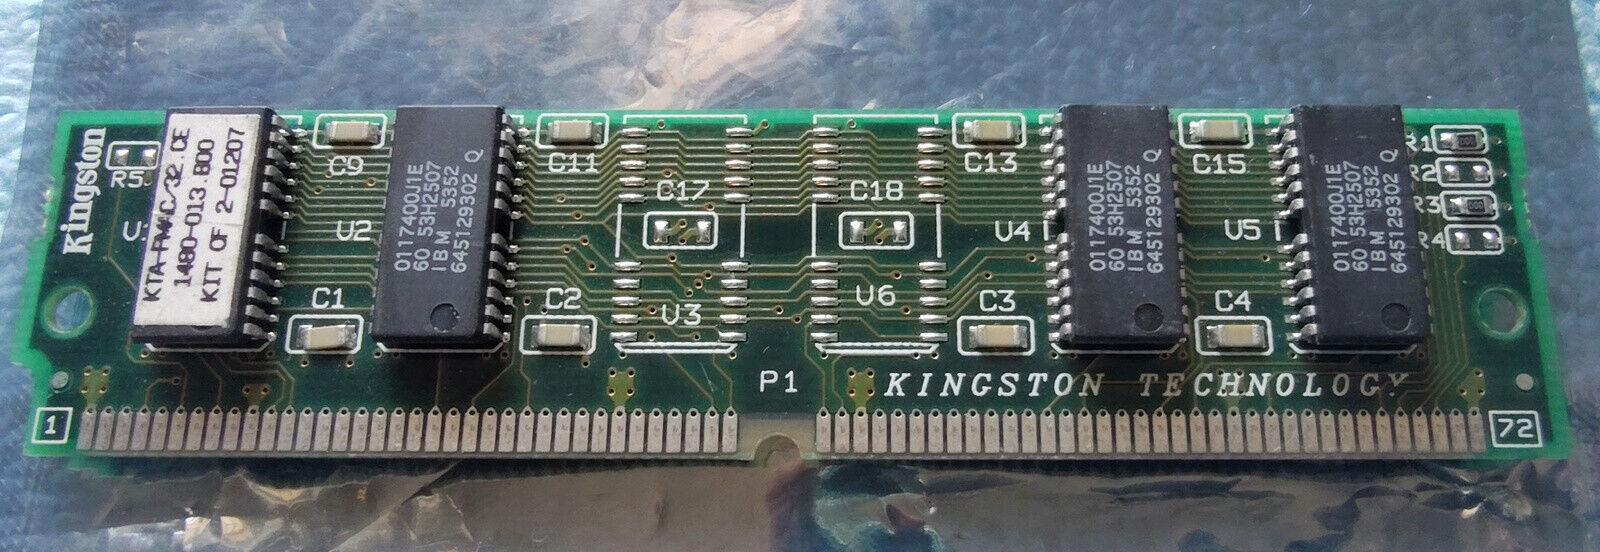 Kingston 16MB 72-pin SIMM IBM Chips 60ns Apple Mac Desktop PC RAM Memory 1990s